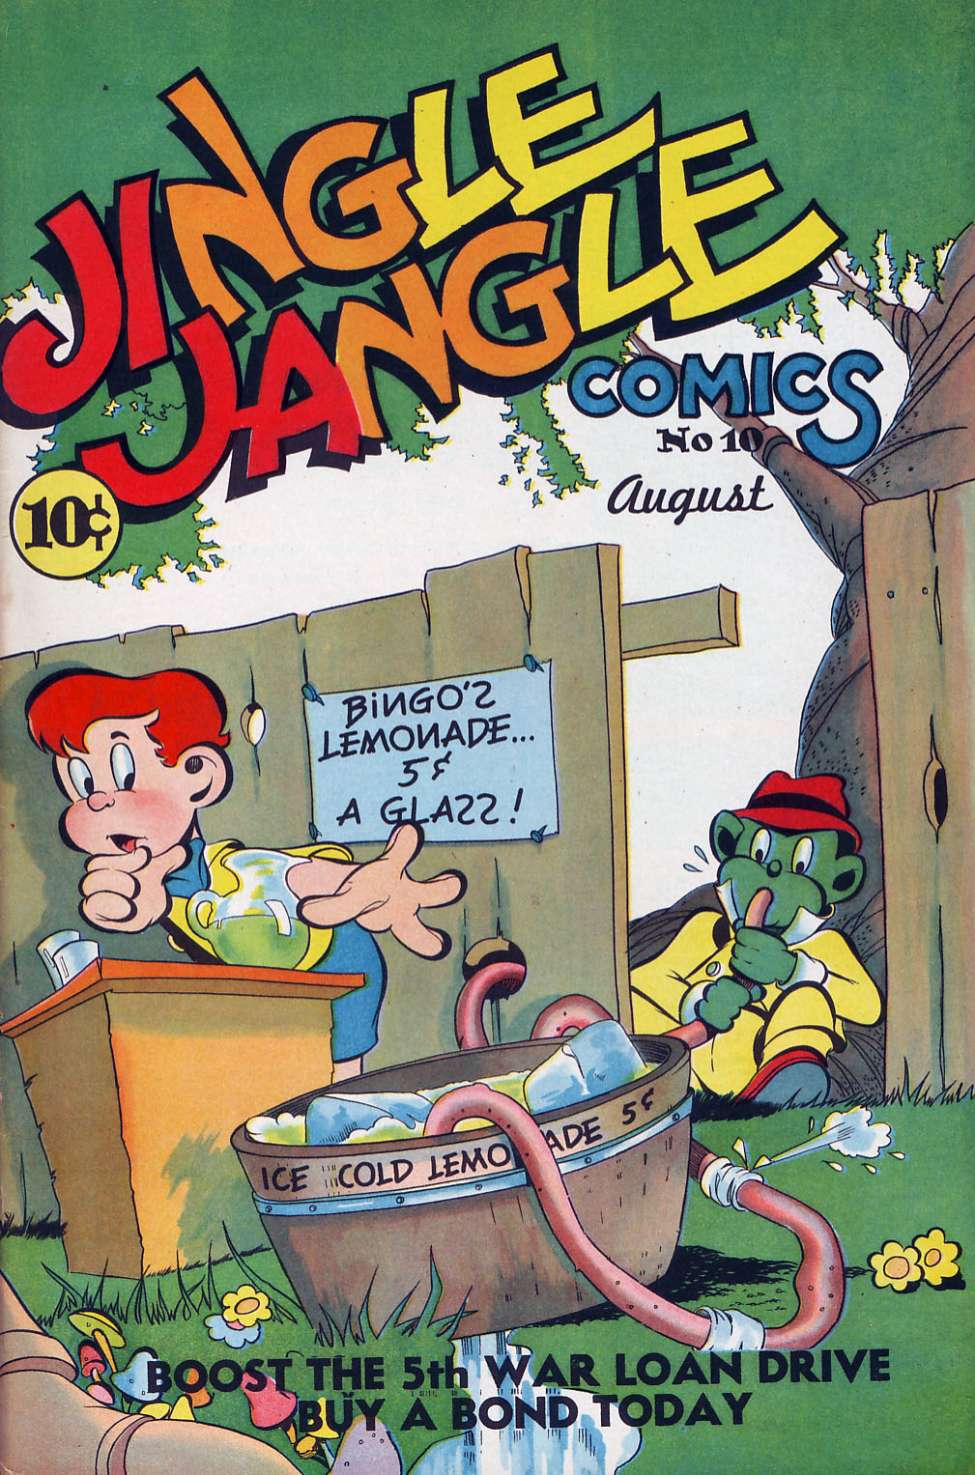 Book Cover For Jingle Jangle Comics 10